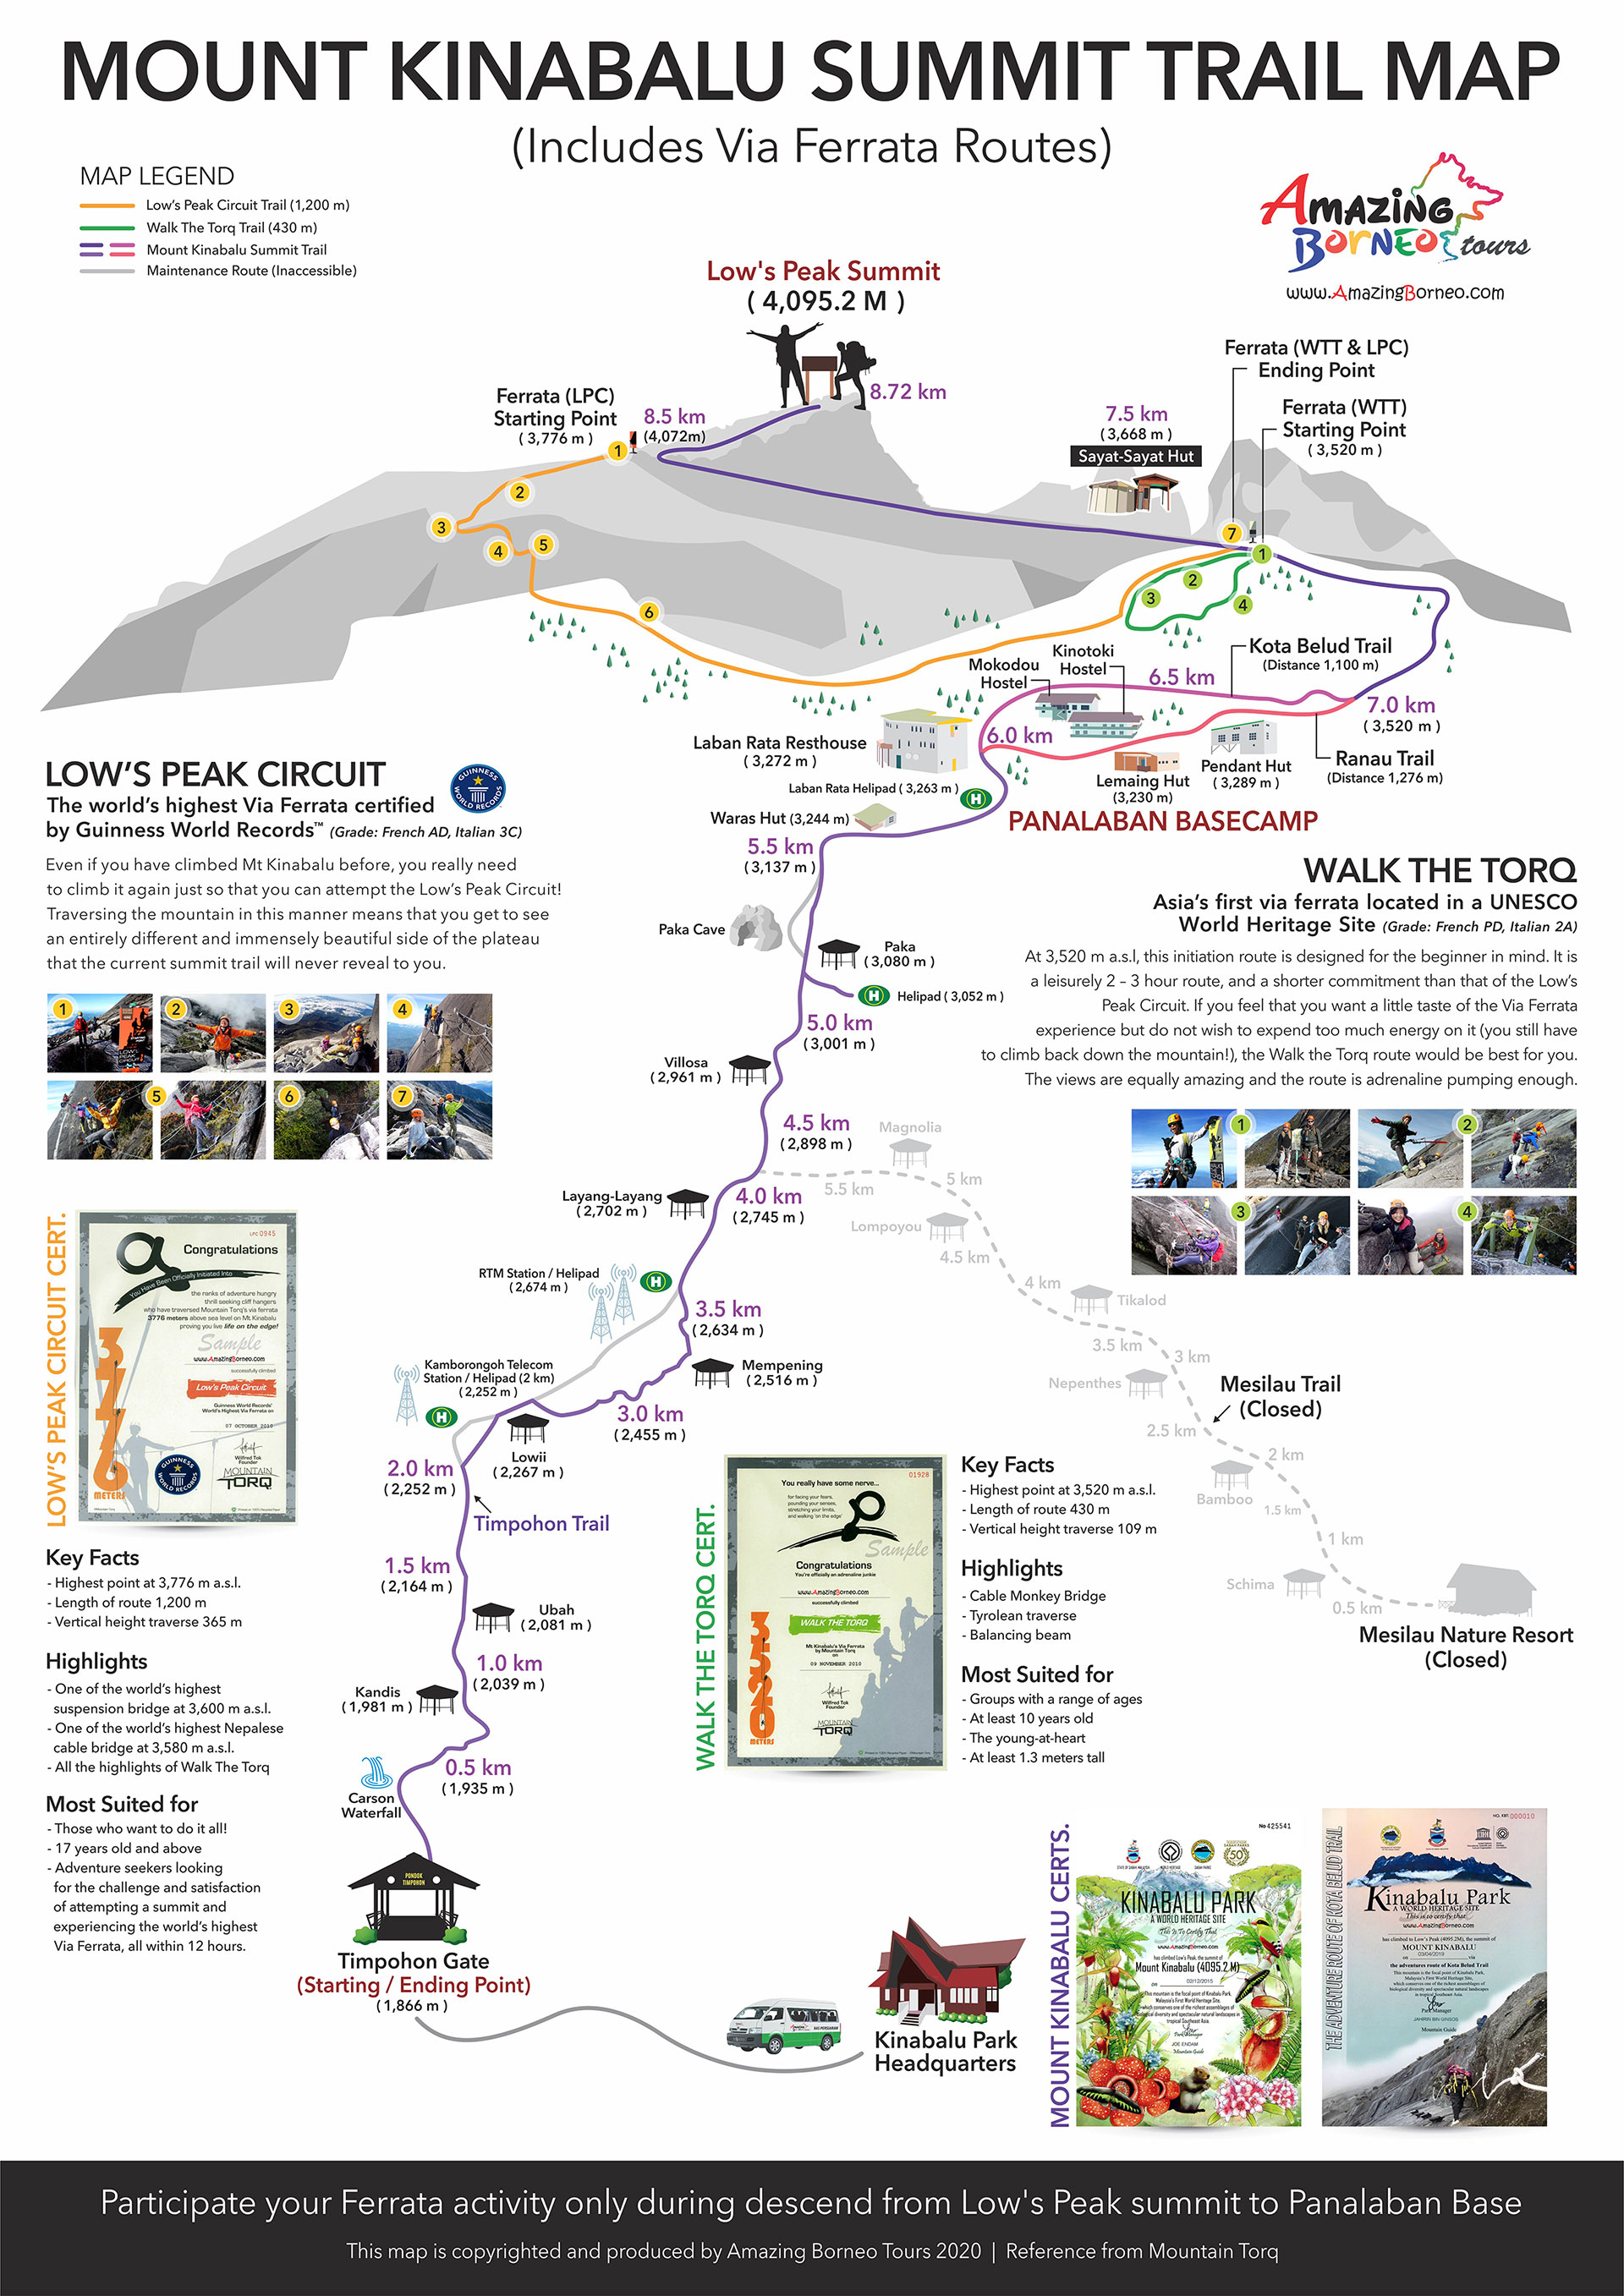 Mount Kinabalu Summit Trail Map with Via Ferrata Routes